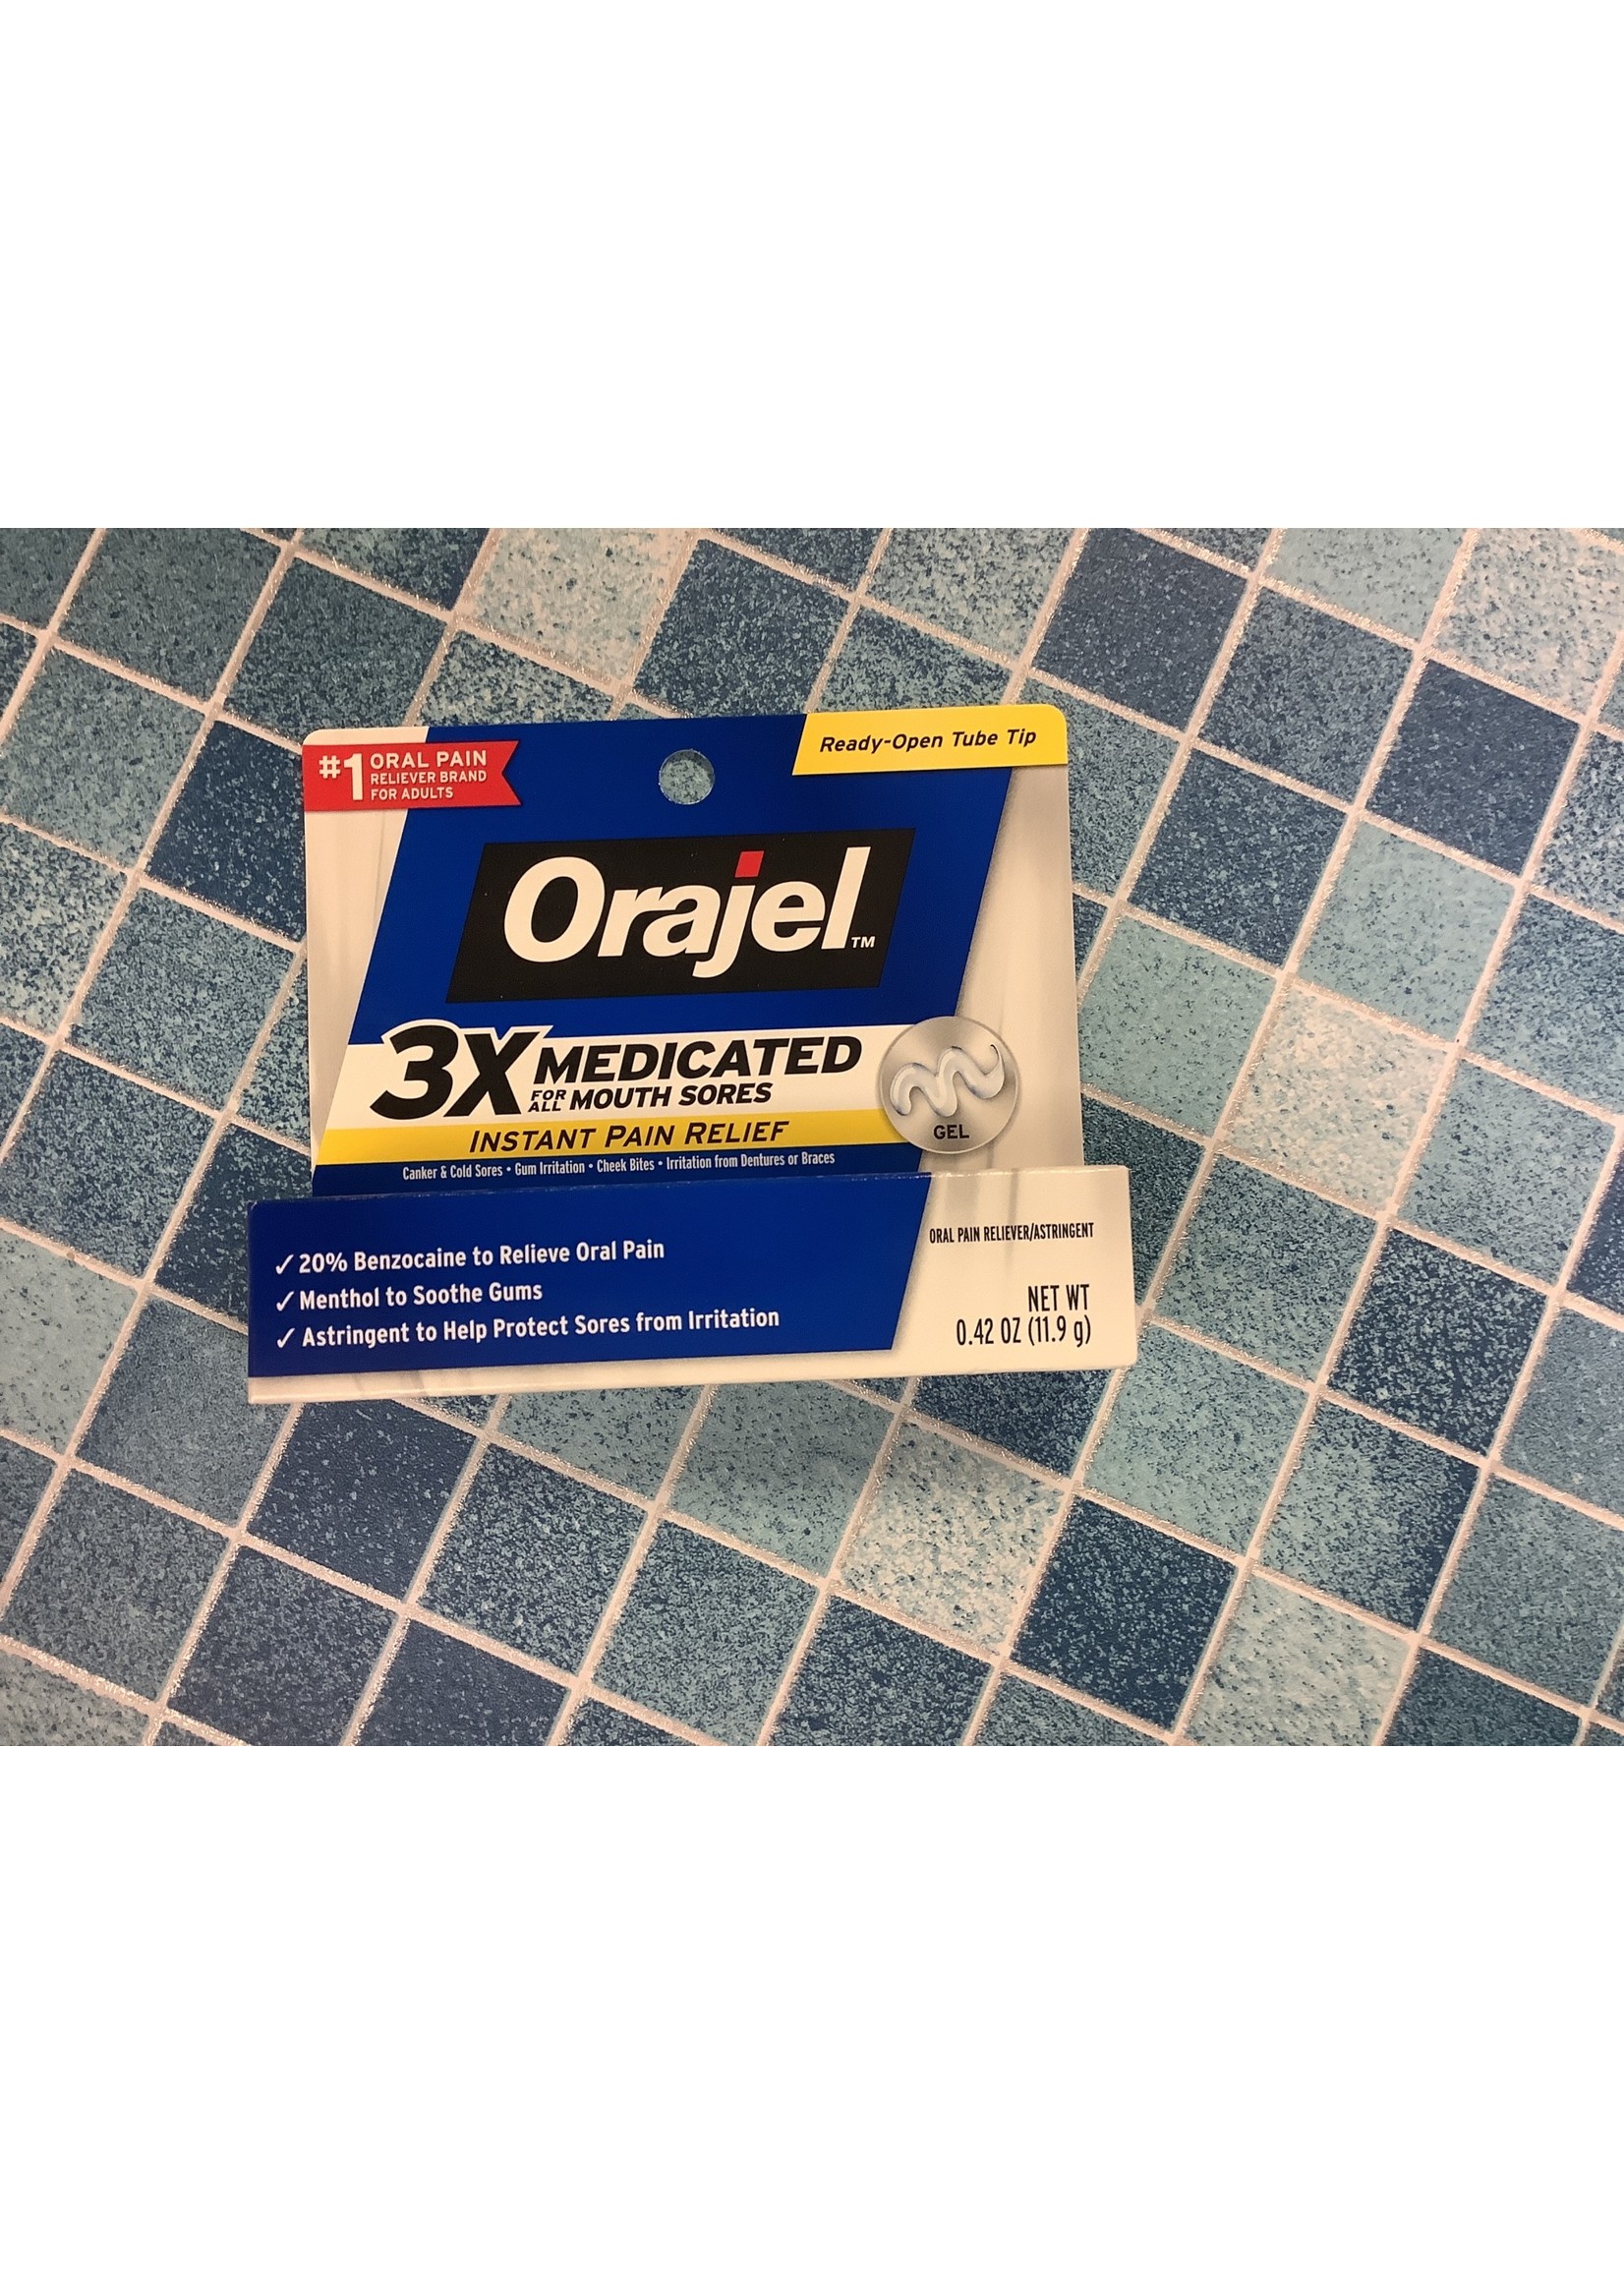 Orajel 3X Medicated For All Mouth Sores Gel - 0.42oz